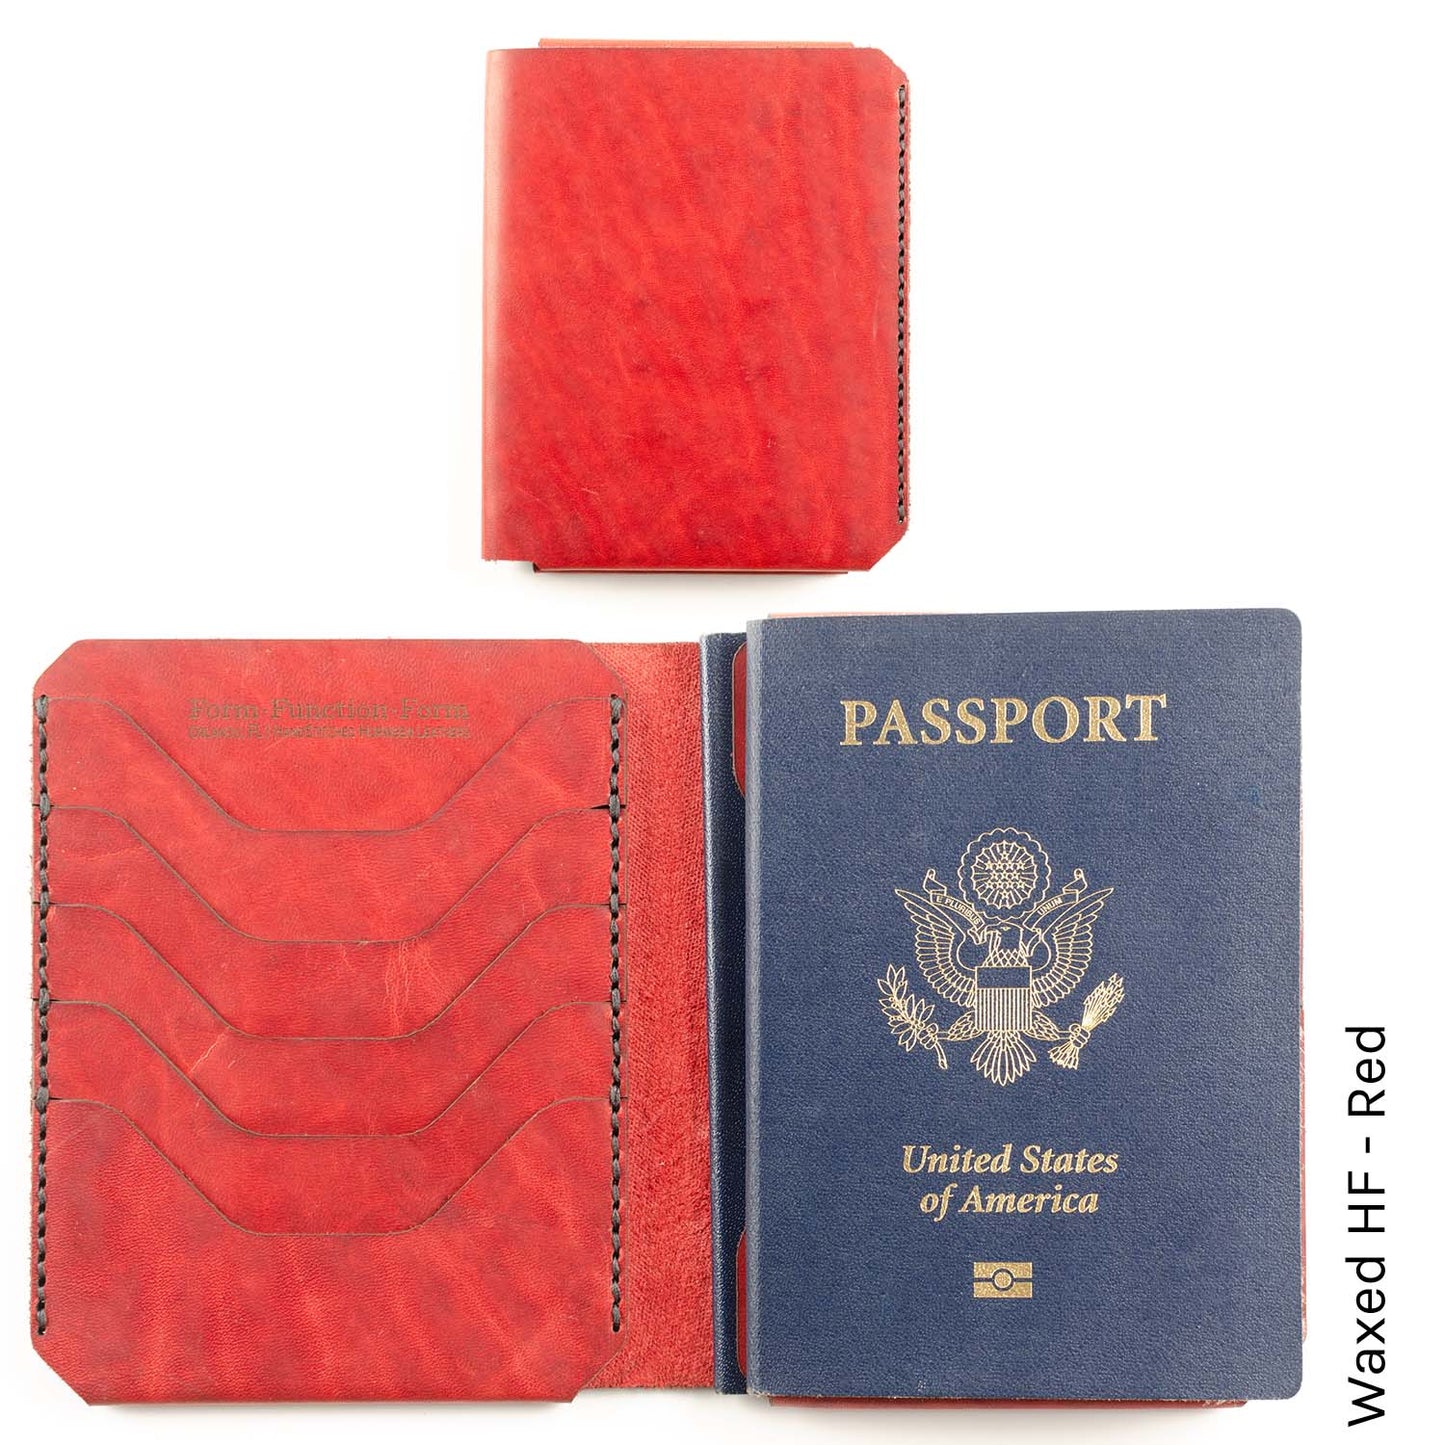 JetSet Passport Wallet – Form Function Form